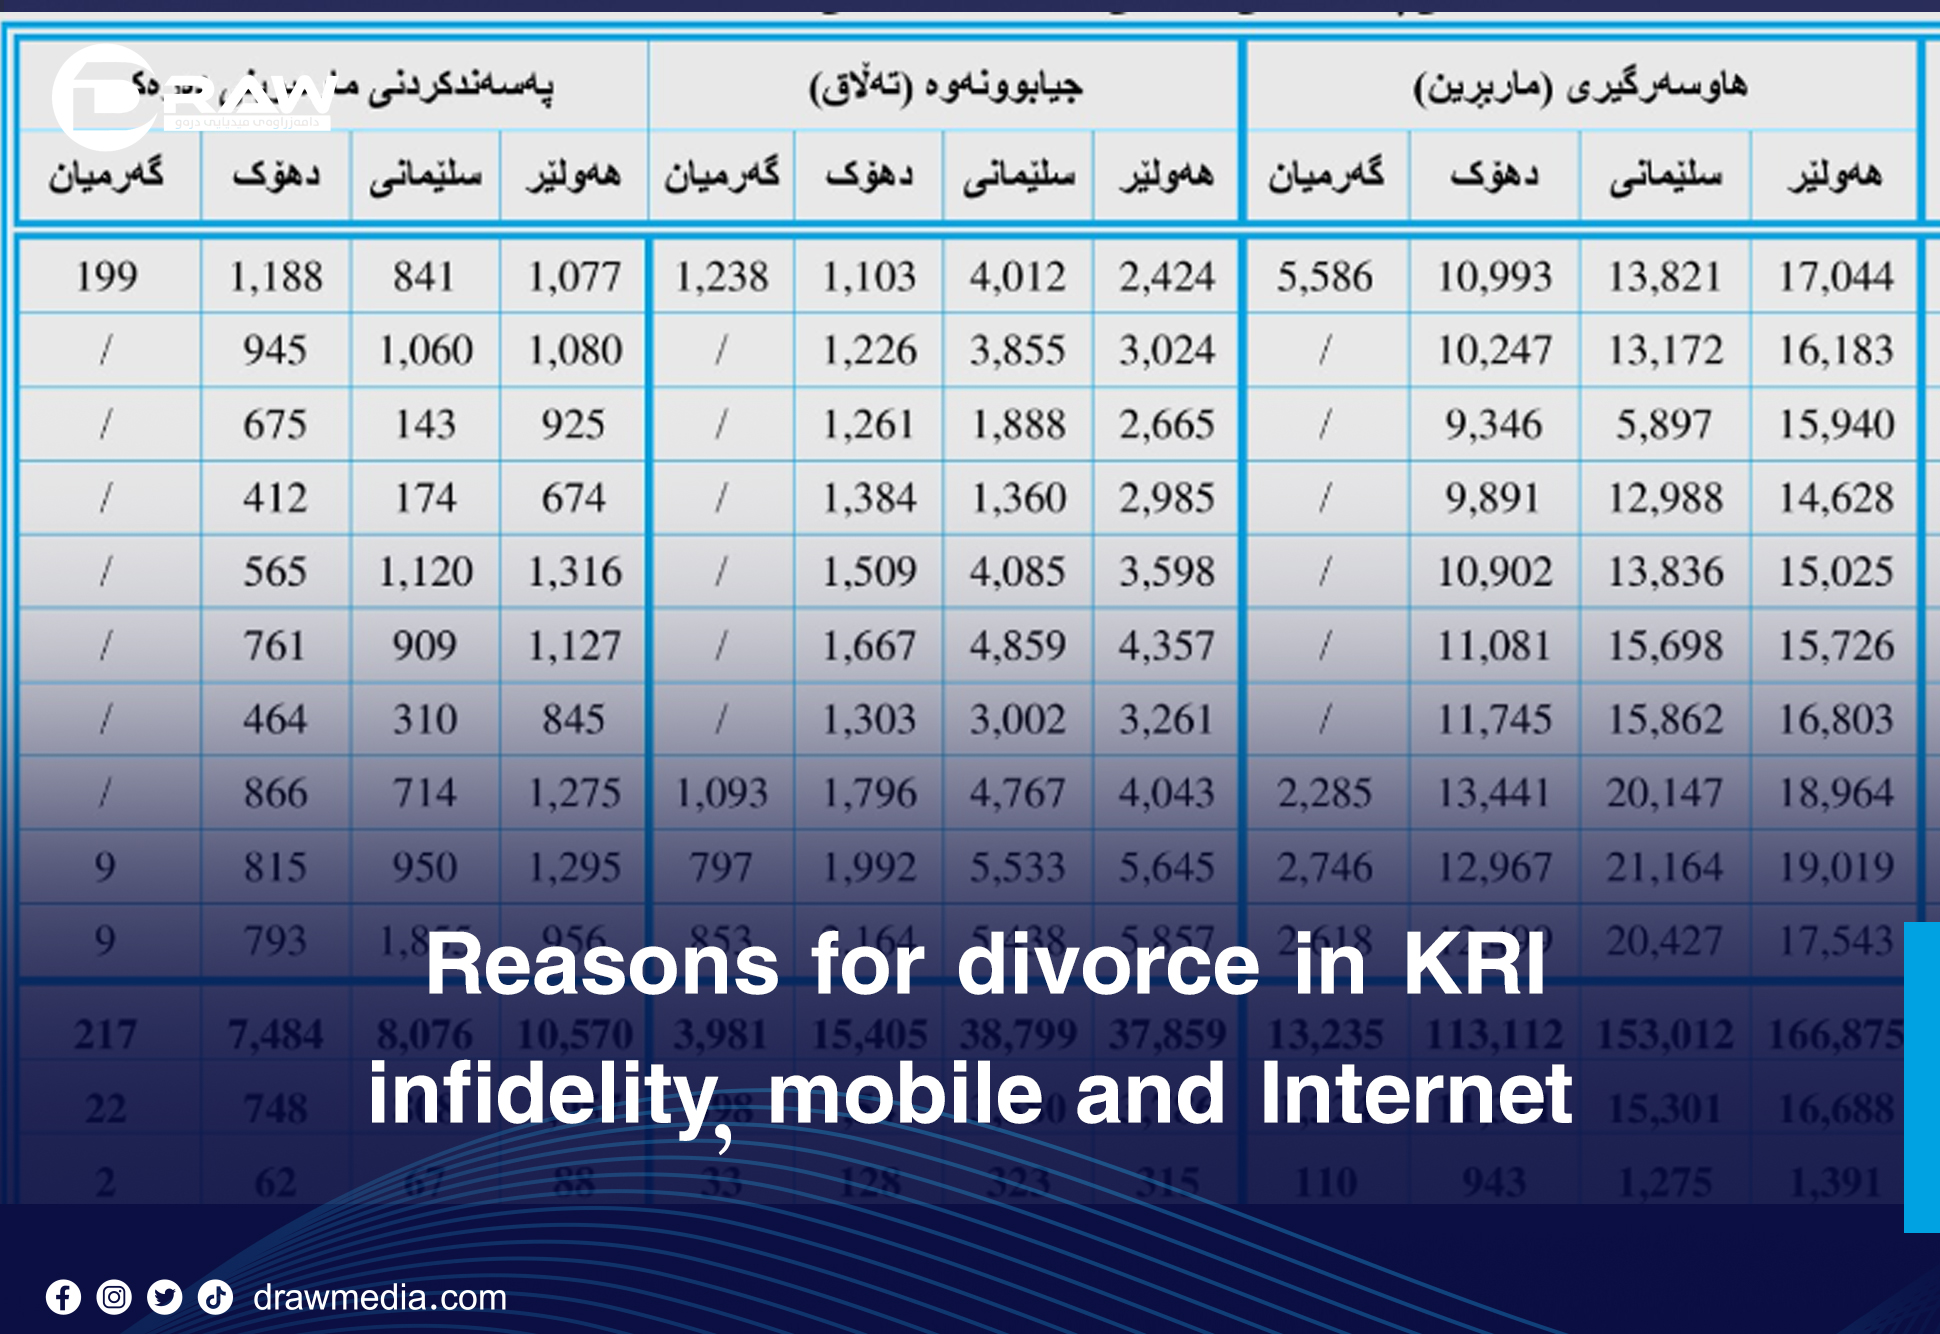 DrawMedia.net / Reasons for divorce: infidelity, mobile and Internet